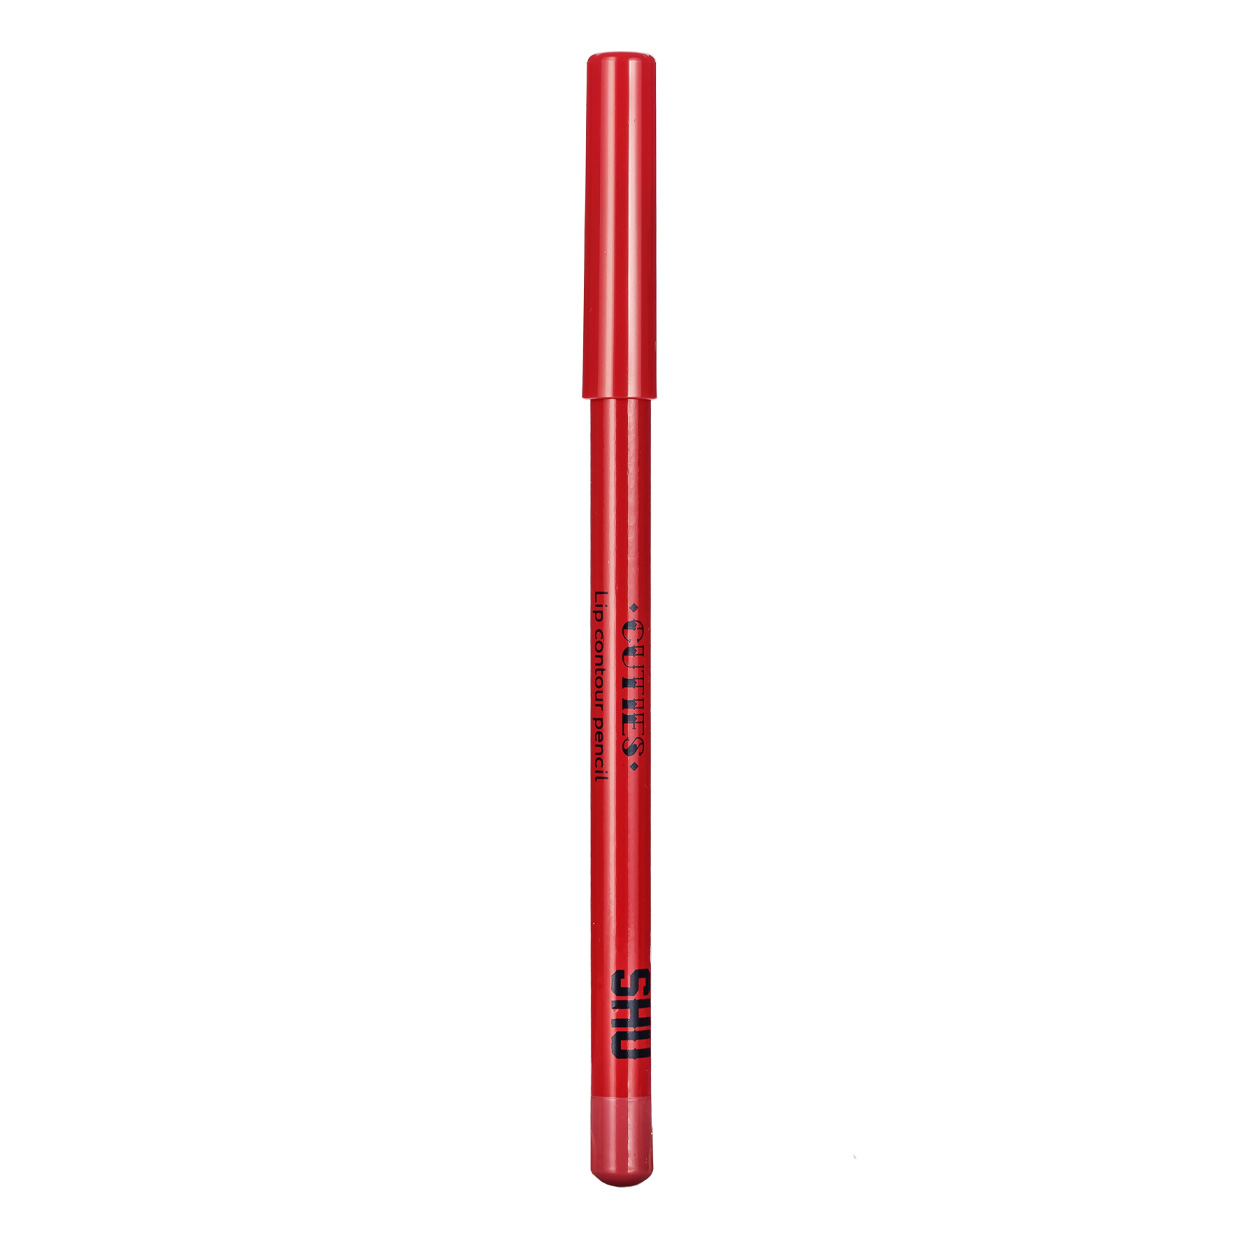 Карандаш для губ SHU Cuties контурный, сатиновый, тон 41 Летний розовый, 0,78 г карандаш для губ shu cuties контурный сатиновый тон 52 базовый нюдовый 0 78 г